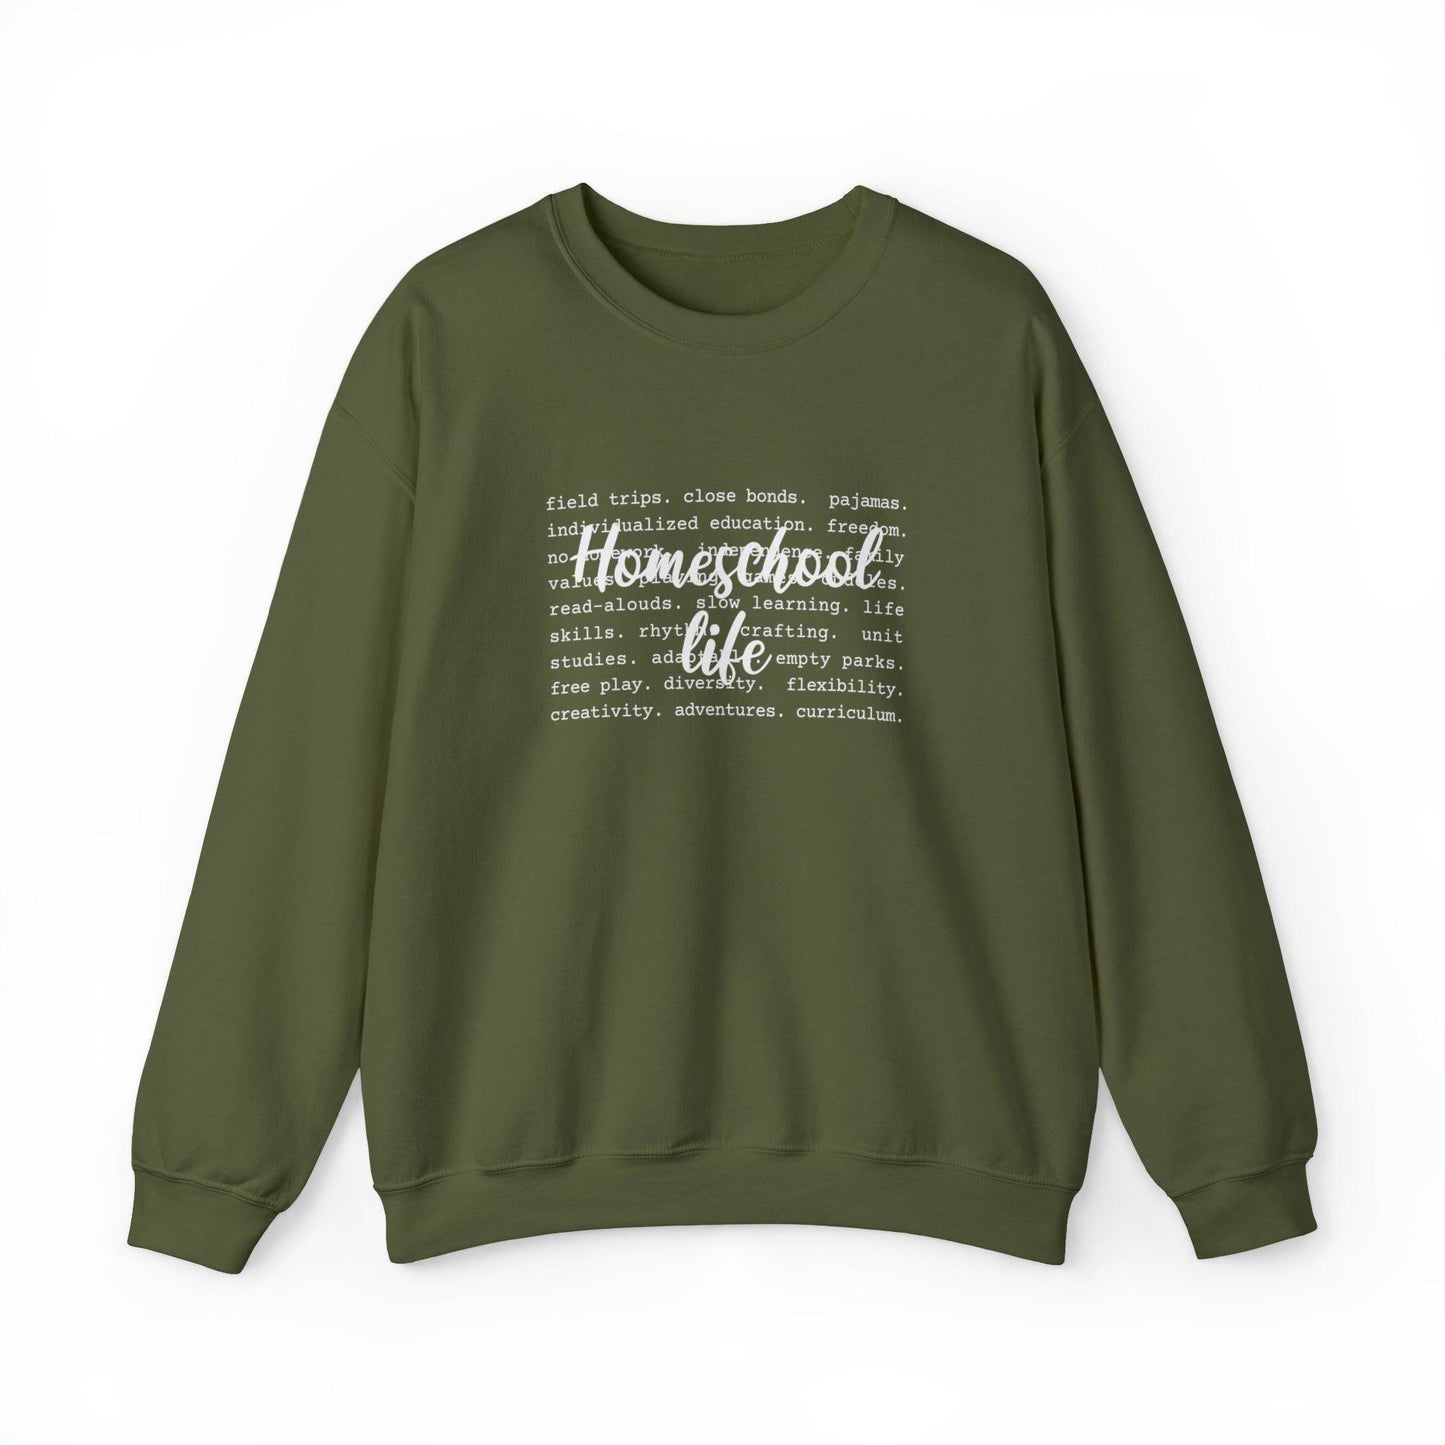 homeschool life sweatshirt for homeschooling moms in army green